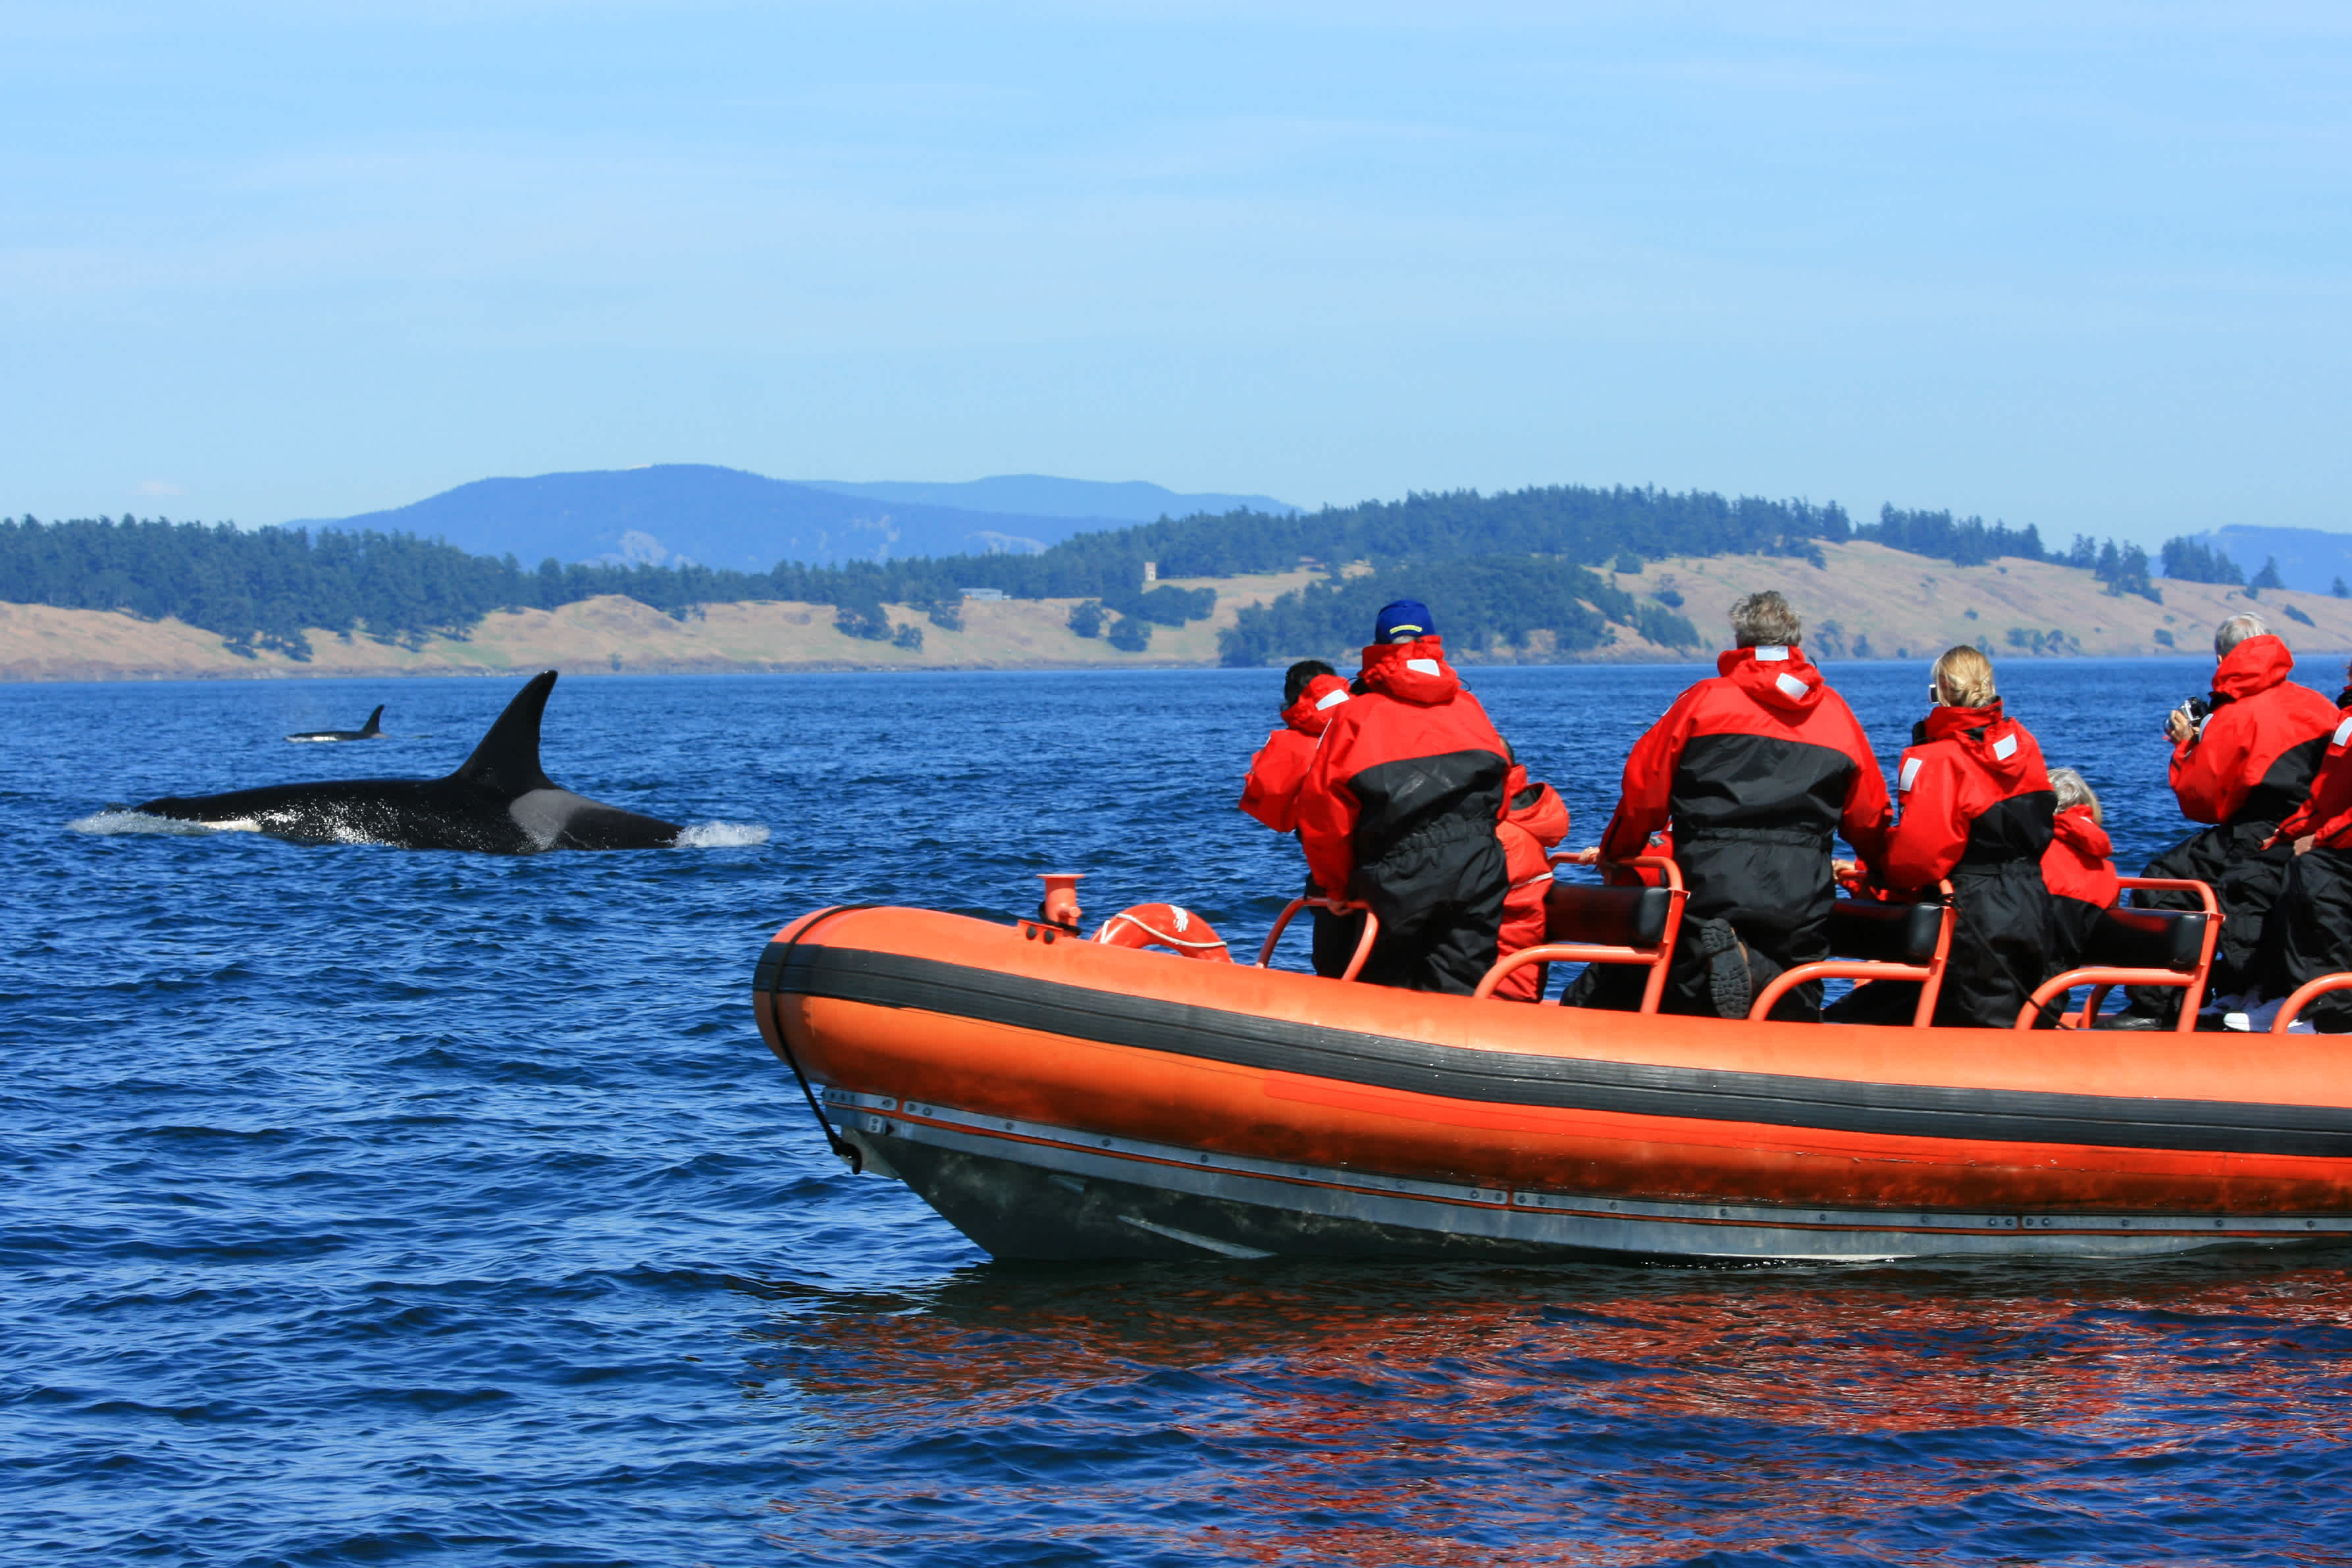 Beobachtung von Orca-Walen in Zodiac-Boot, Kanada.